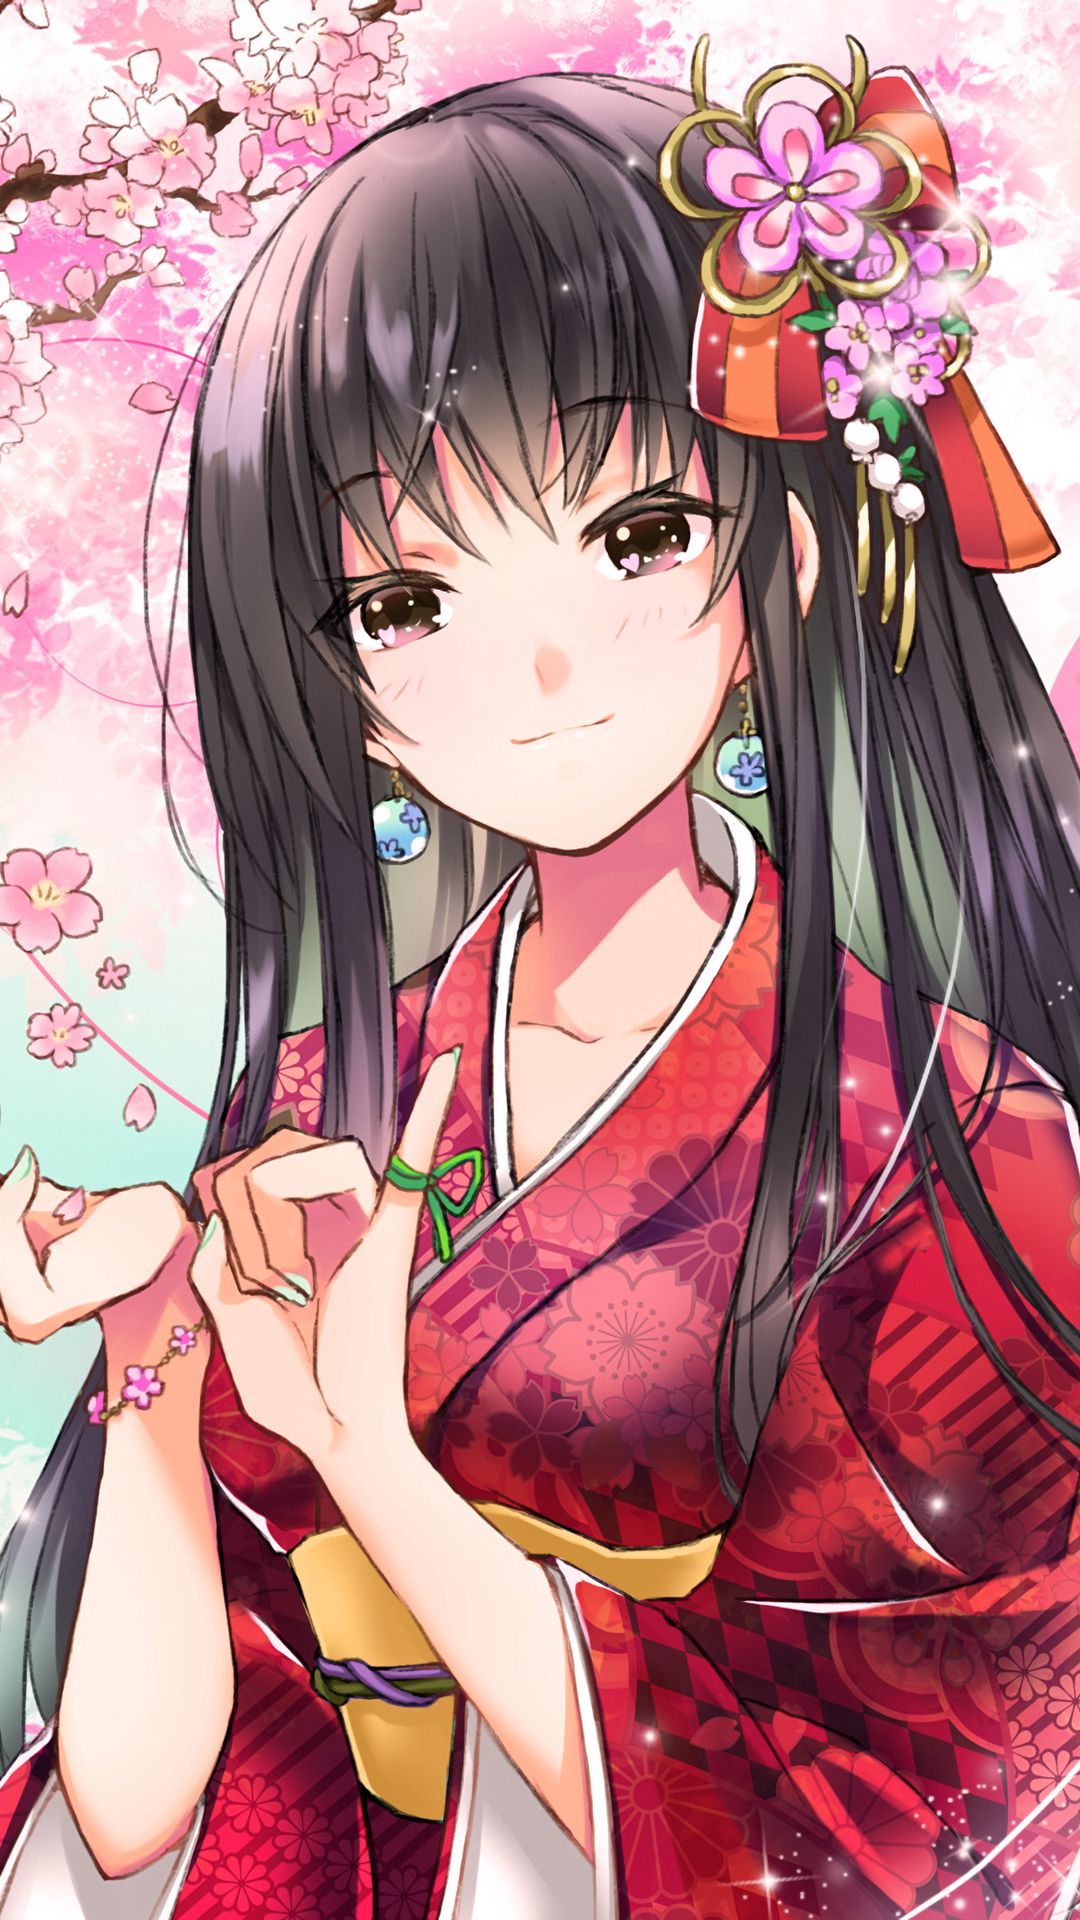 Download Wallpaper 1080x19 Girl Kimono Kanzashi Sakura Anime Samsung Galaxy S4 S5 Note Sony Xperia Z Z1 Z2 Z3 Htc One Lenovo Vibe Hd Background